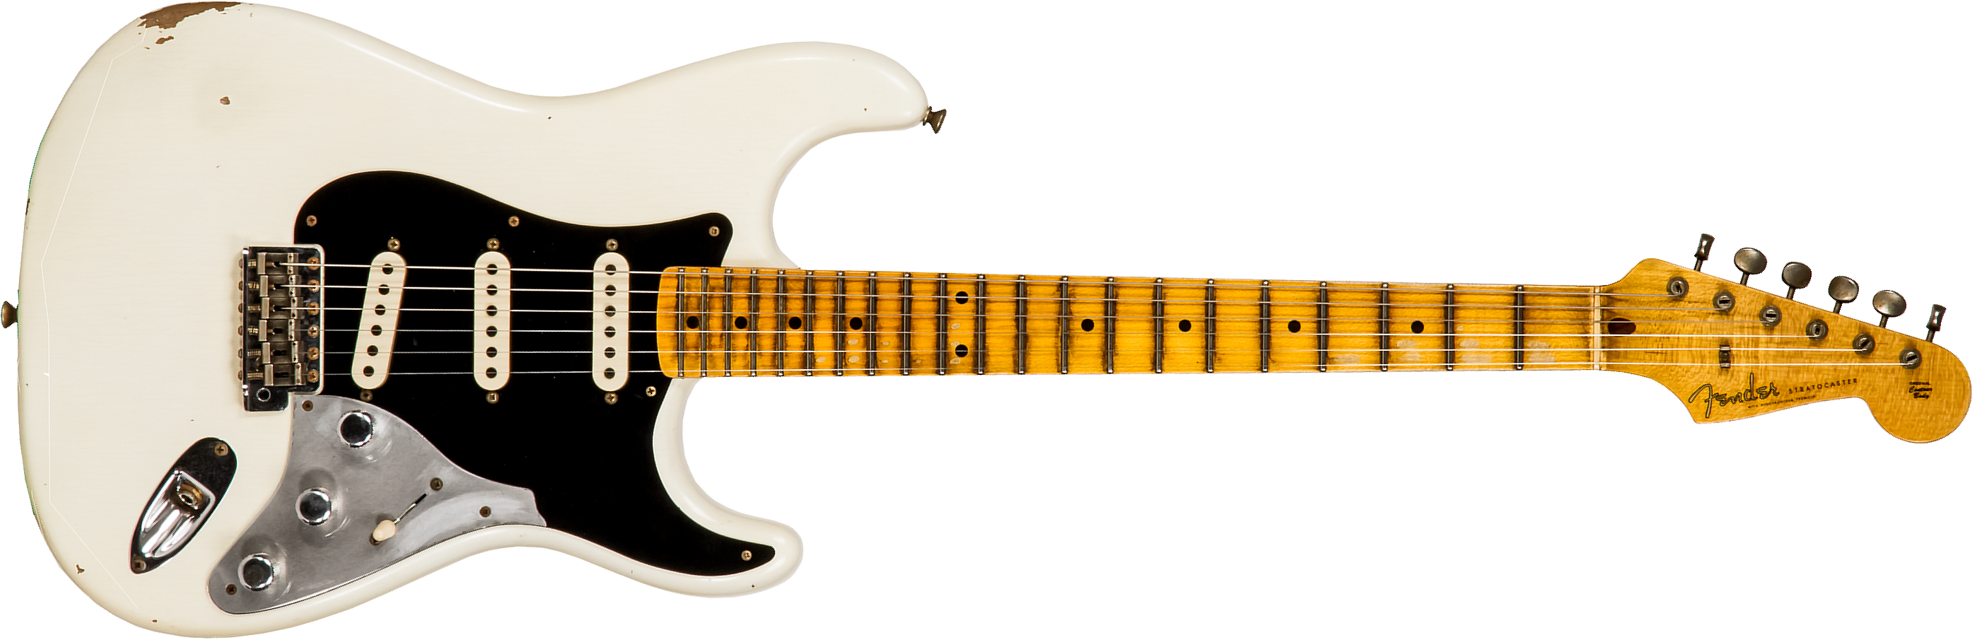 Fender Custom Shop Strat Poblano Ii 3s Trem Mn #cz555378 - Relic Olympic White - Str shape electric guitar - Main picture